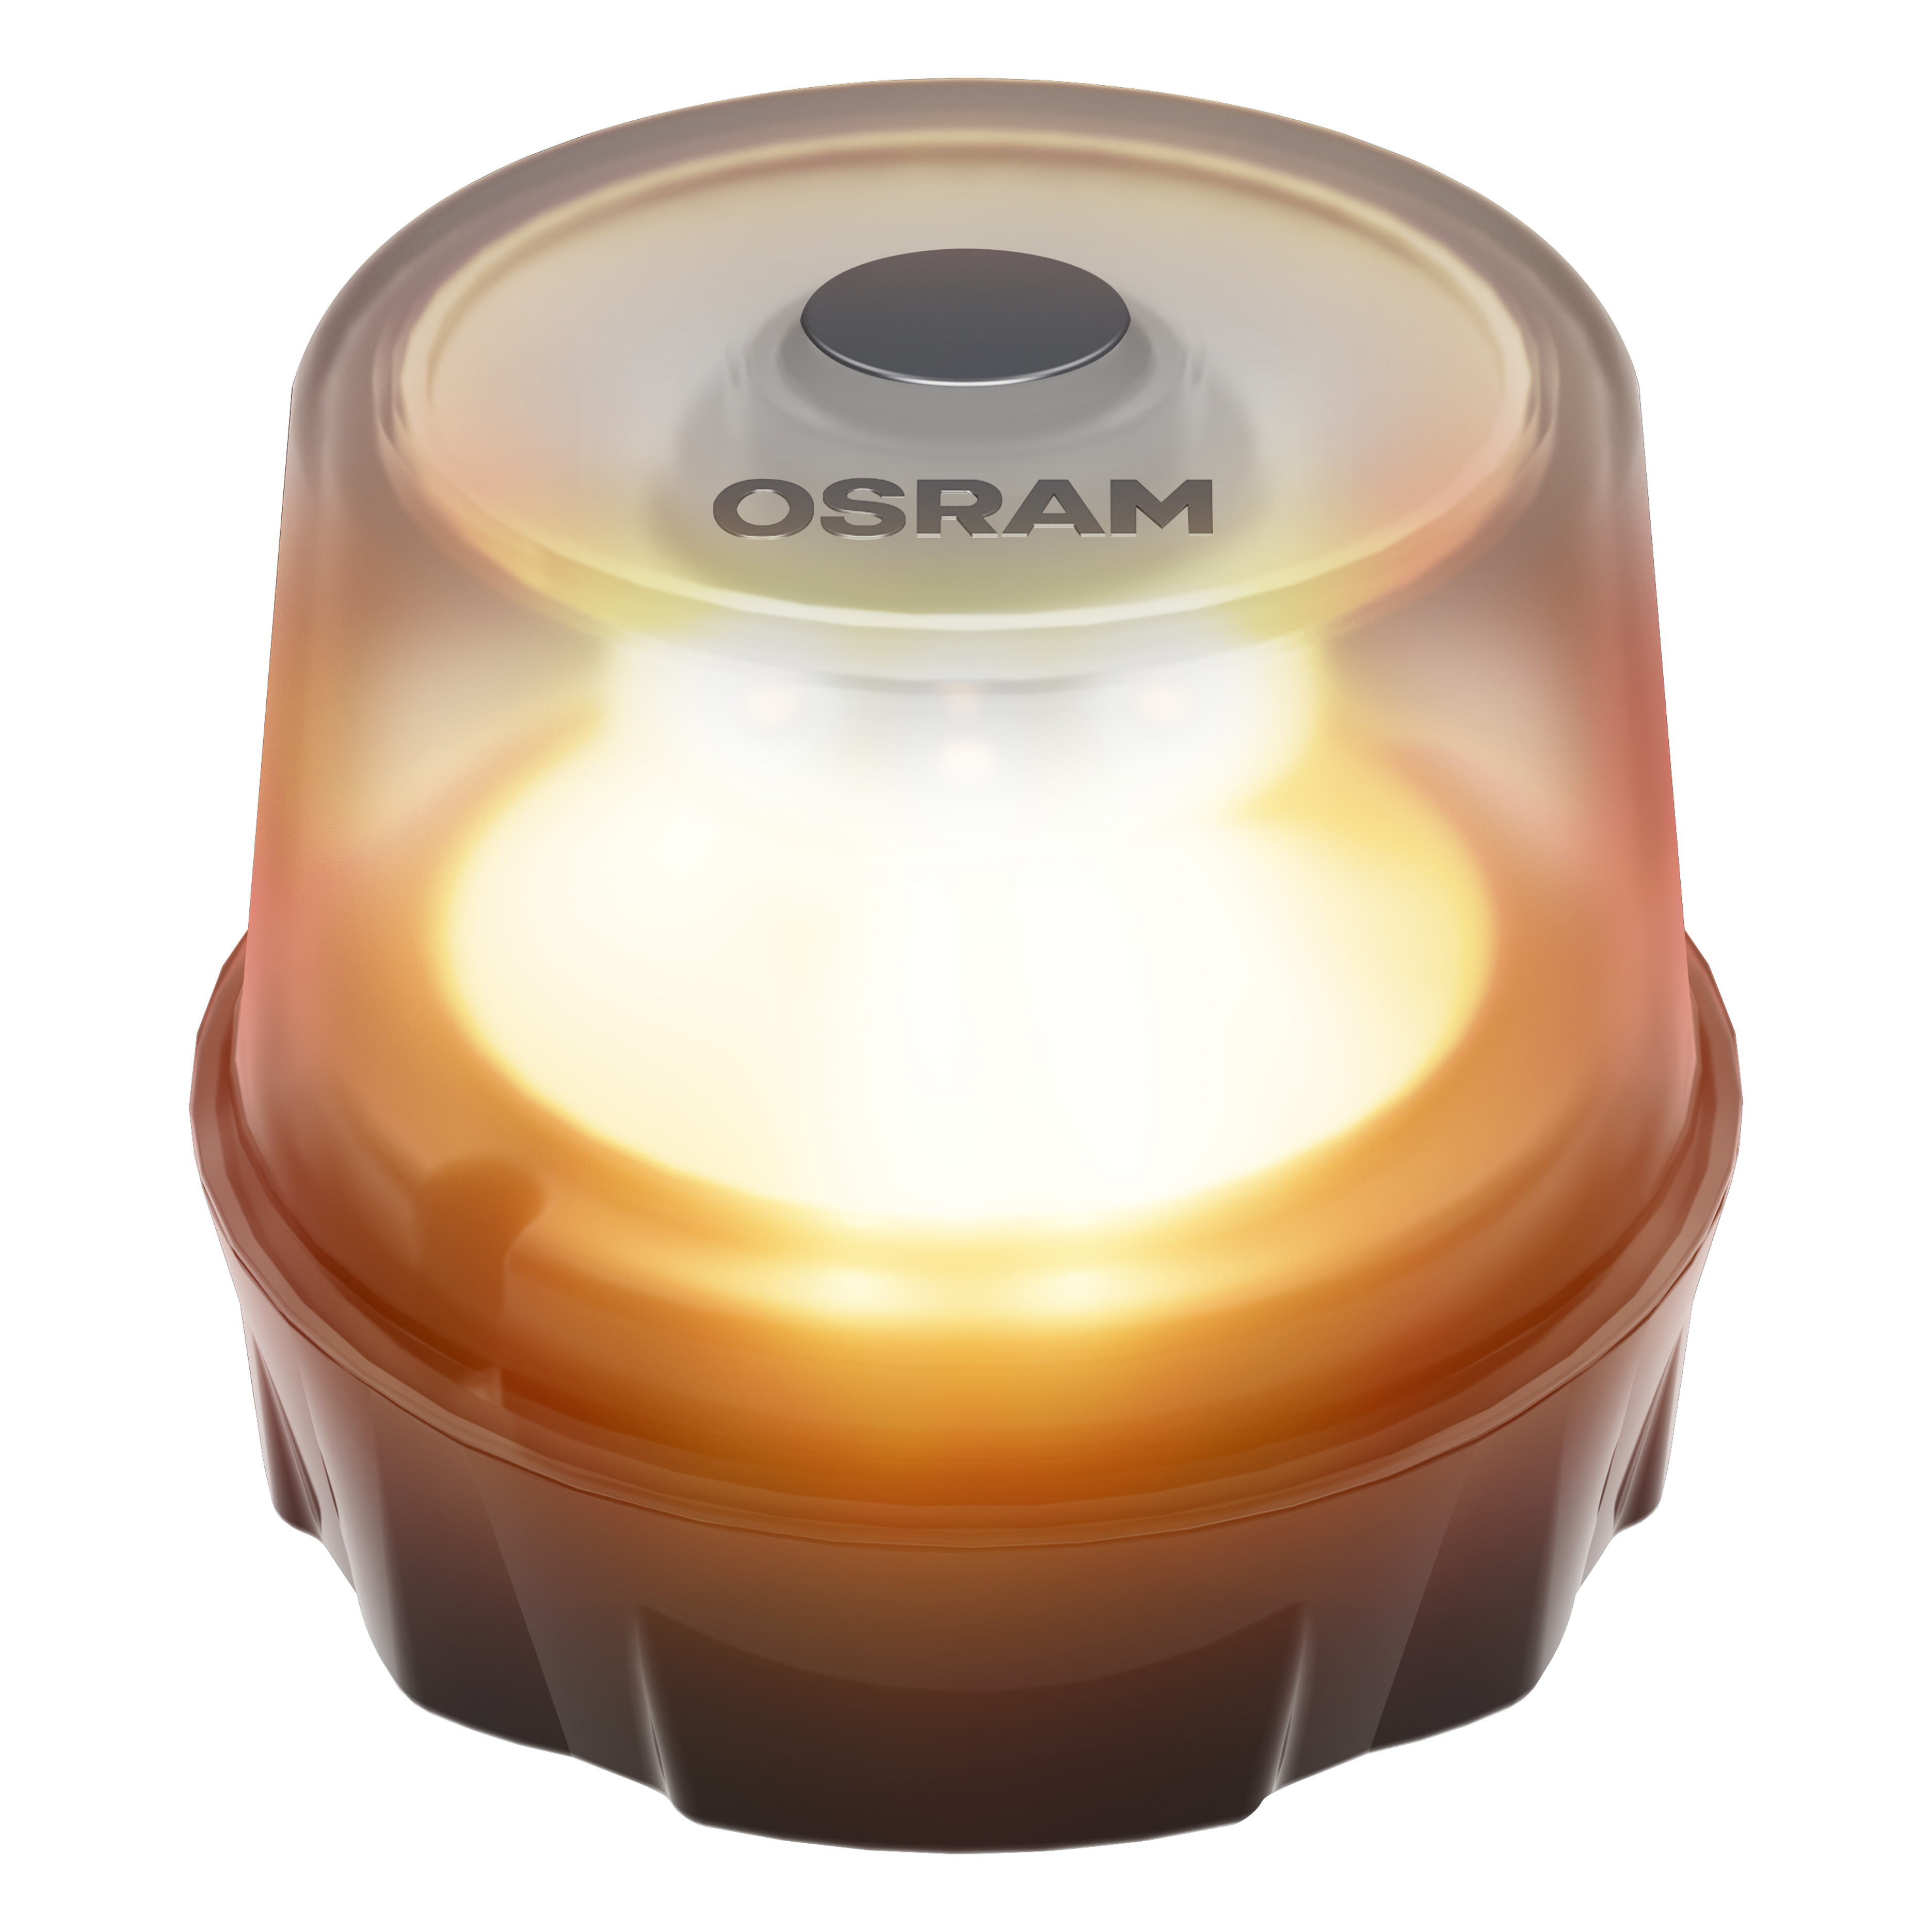 osram-dam-23980305_OSRAM_LEDguardian_ROADFLARE_TA20.jpg